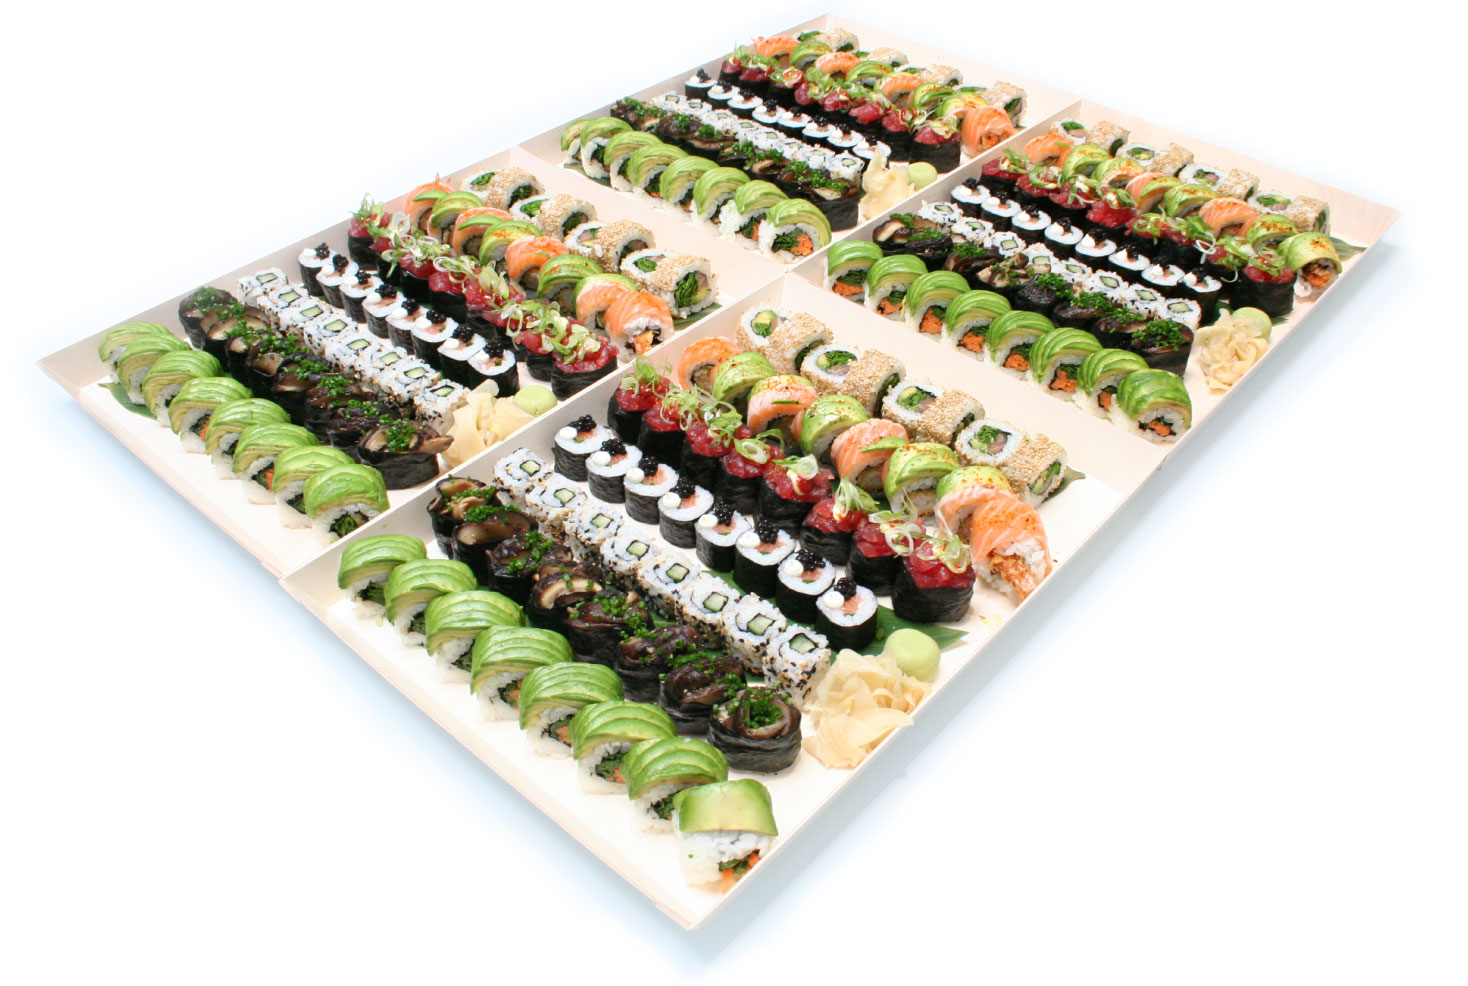 A Sushi Rolls platter